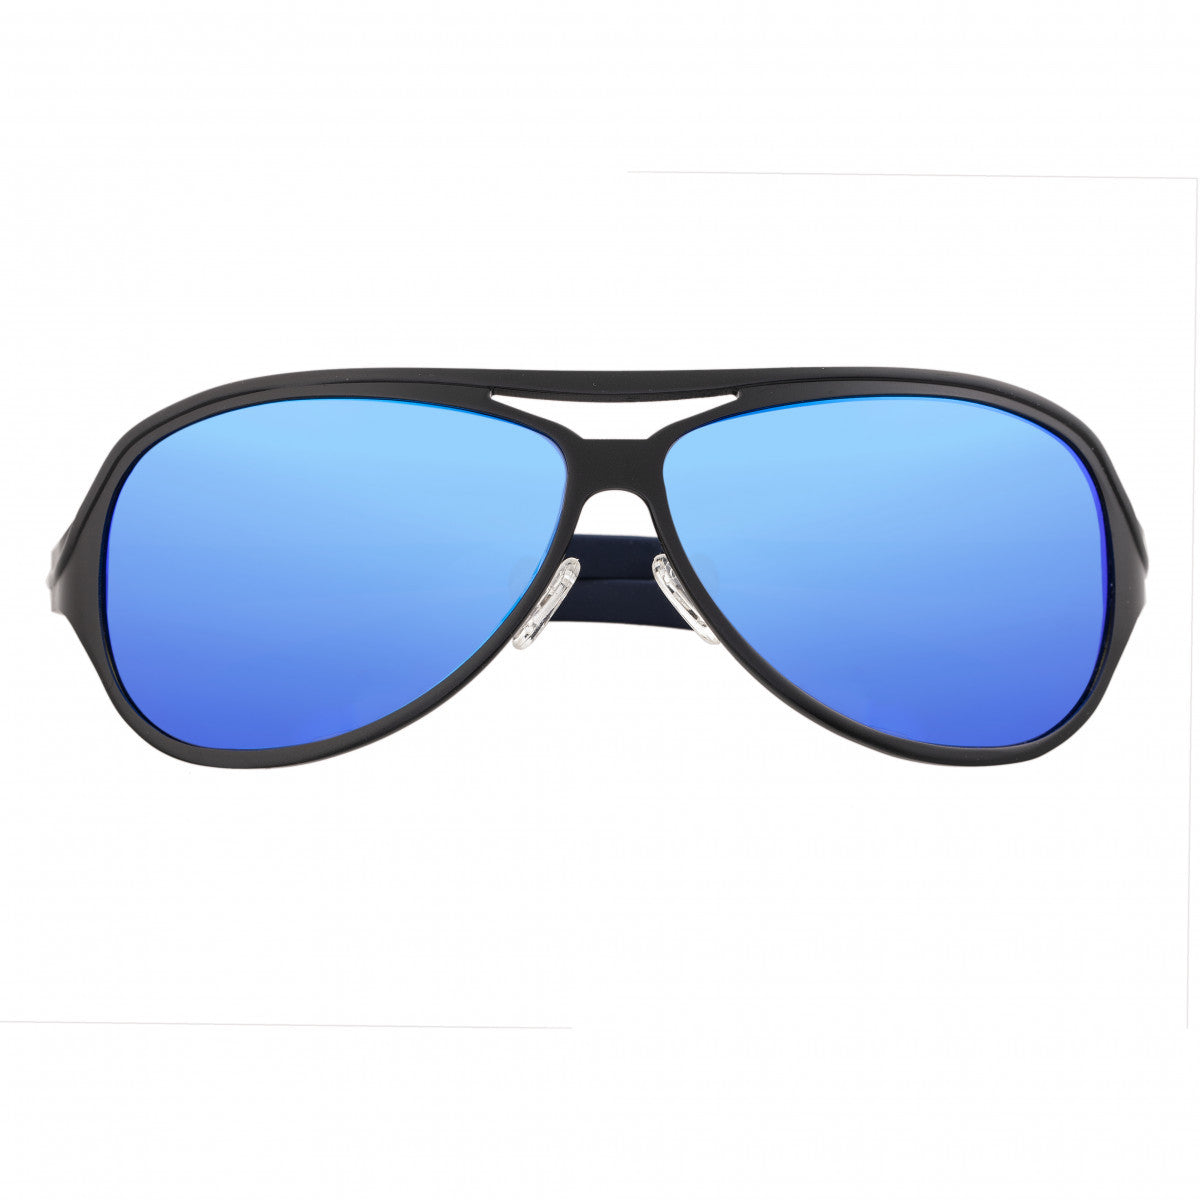 Breed Langston Aluminium Polarized Sunglasses - Black/Blue - BSG012BK